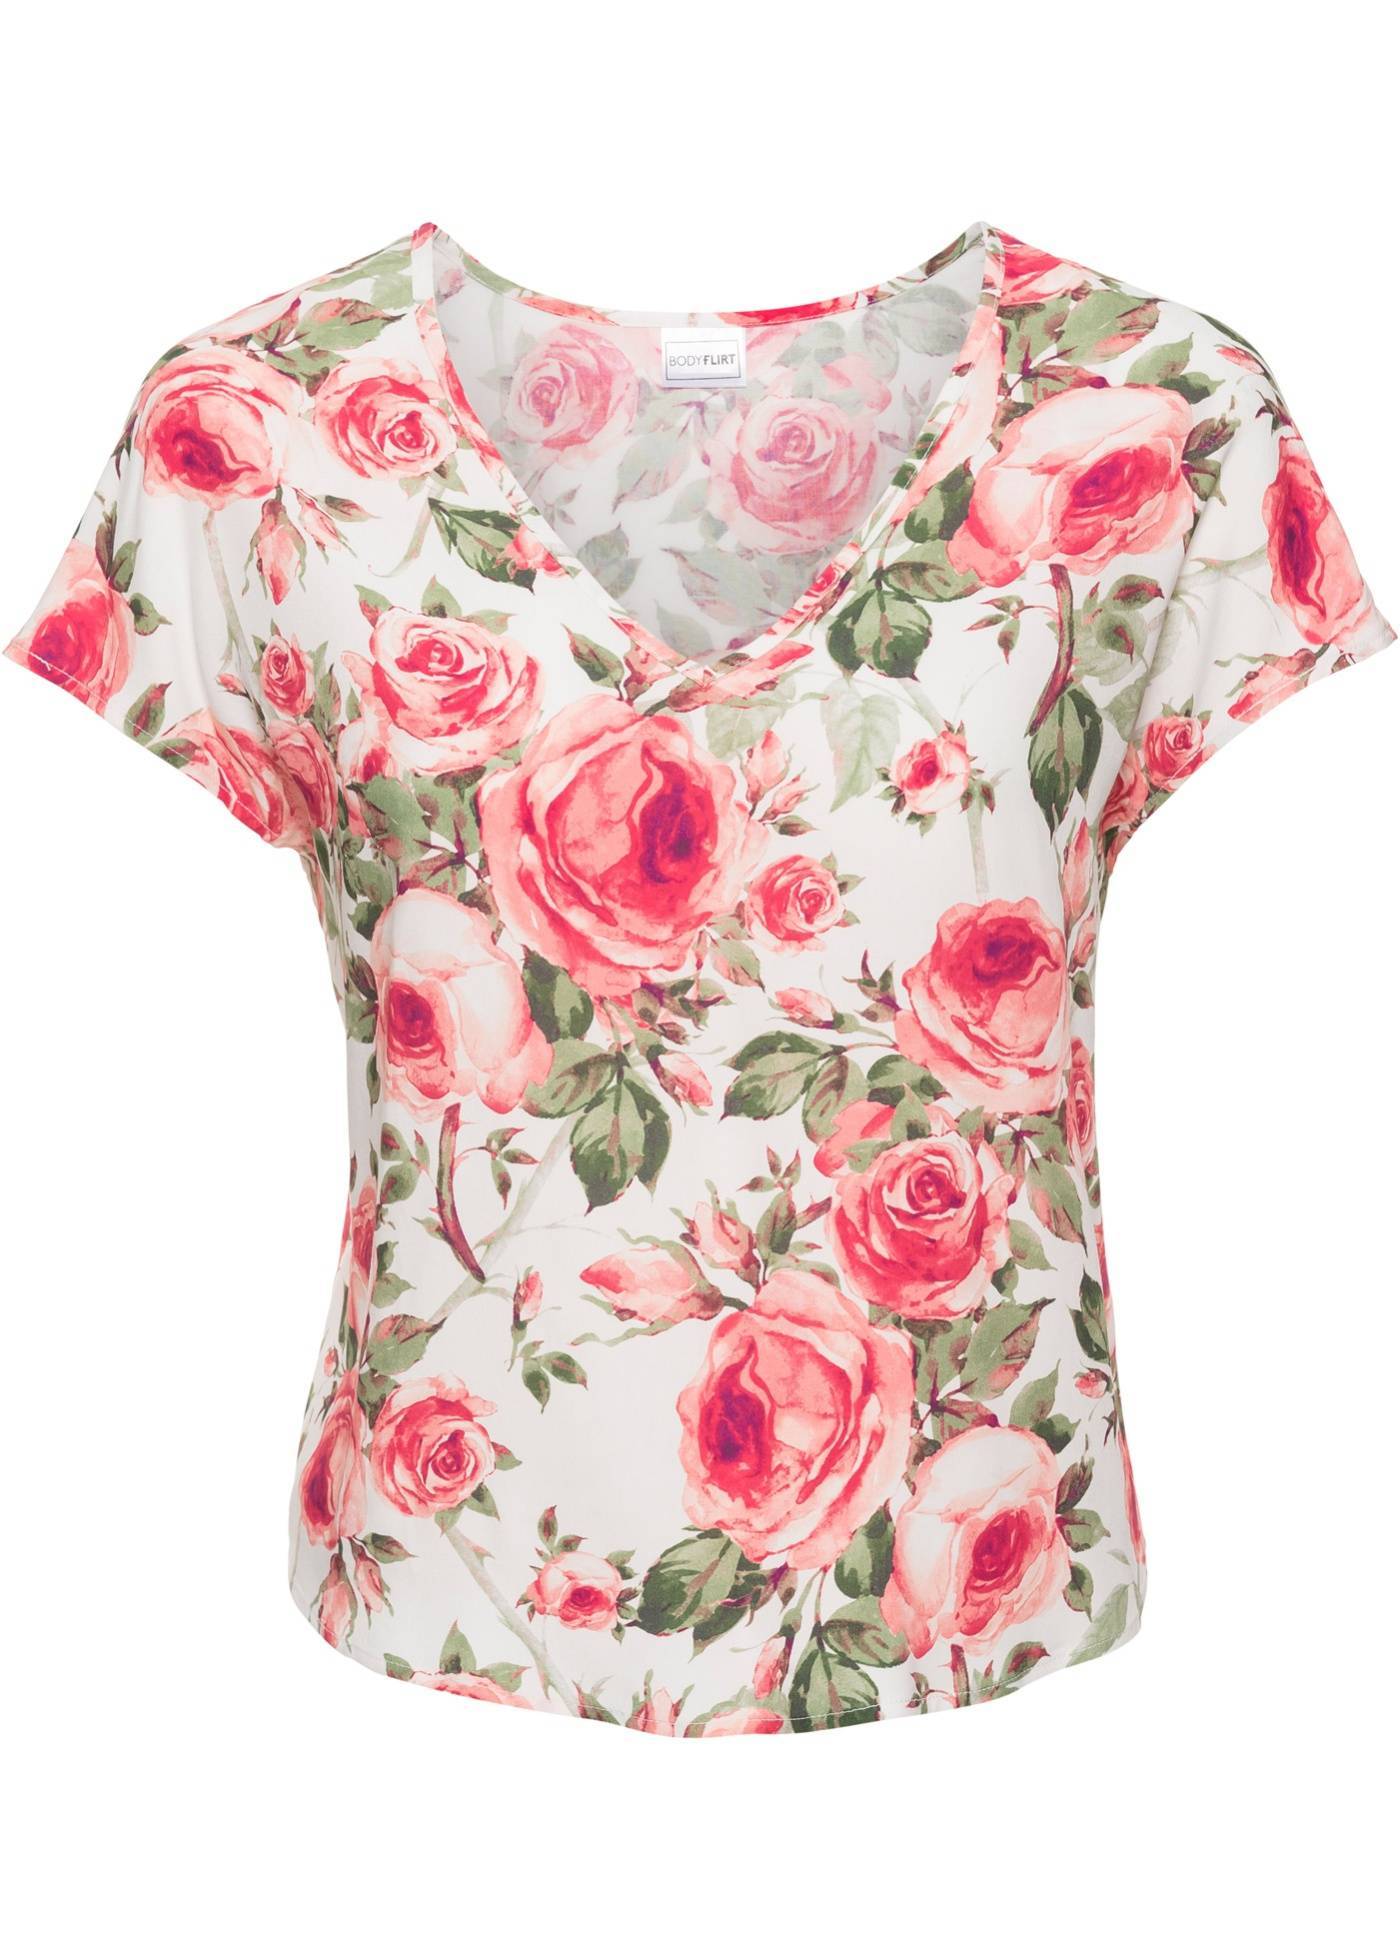 Блузки короткий рукав валберис. Блузка с цветами. Блузка в цветочек. Трикотажные блузки в цветочек. Летняя блузка в цветочек.